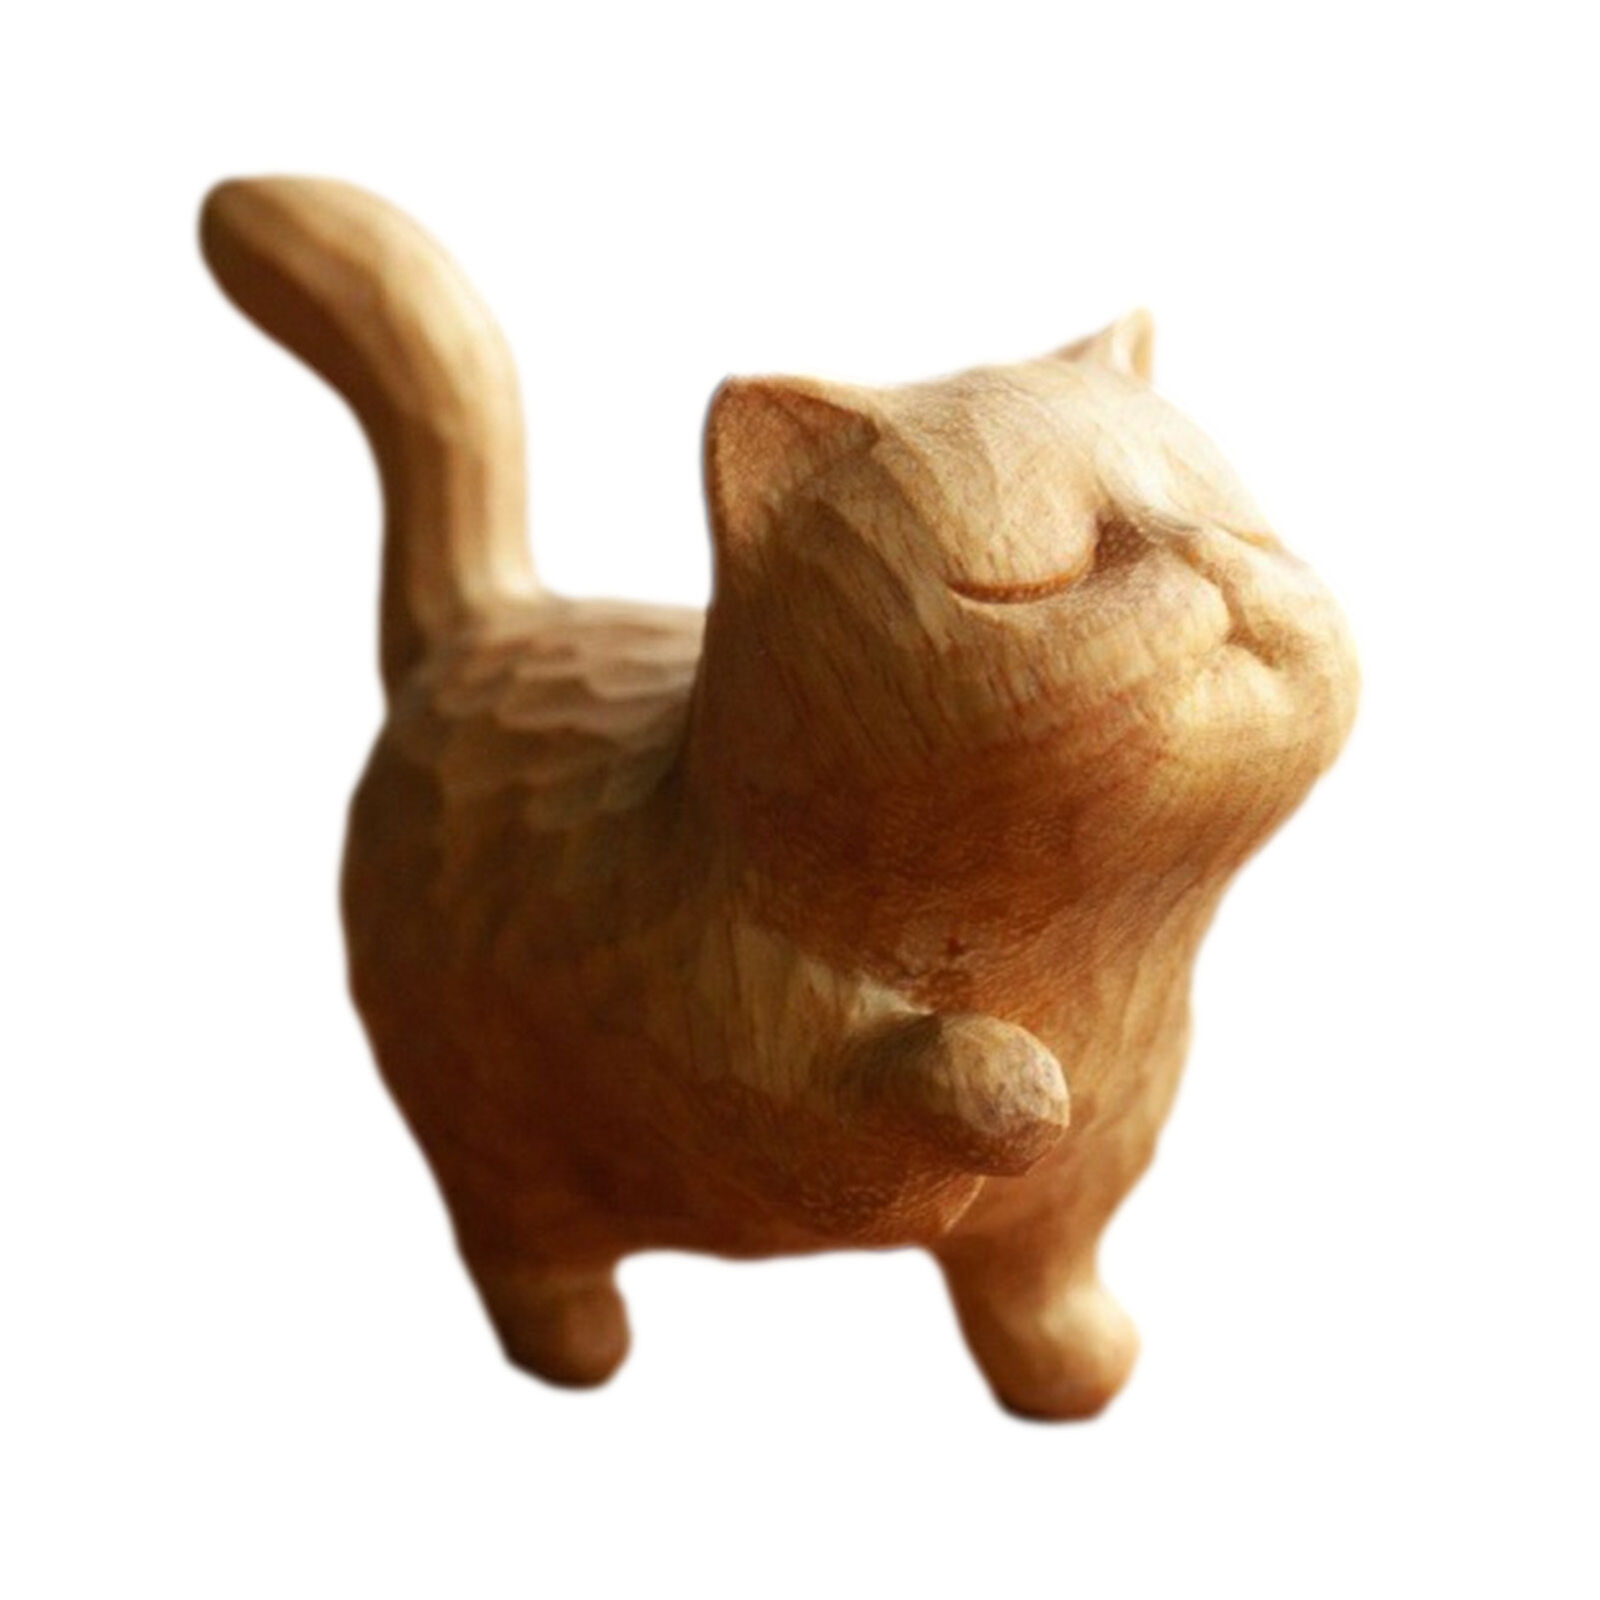 1-4PCS Cat Statues Home Decor Wooden Sculpture Hand Carved Craft Cute Cat Statue